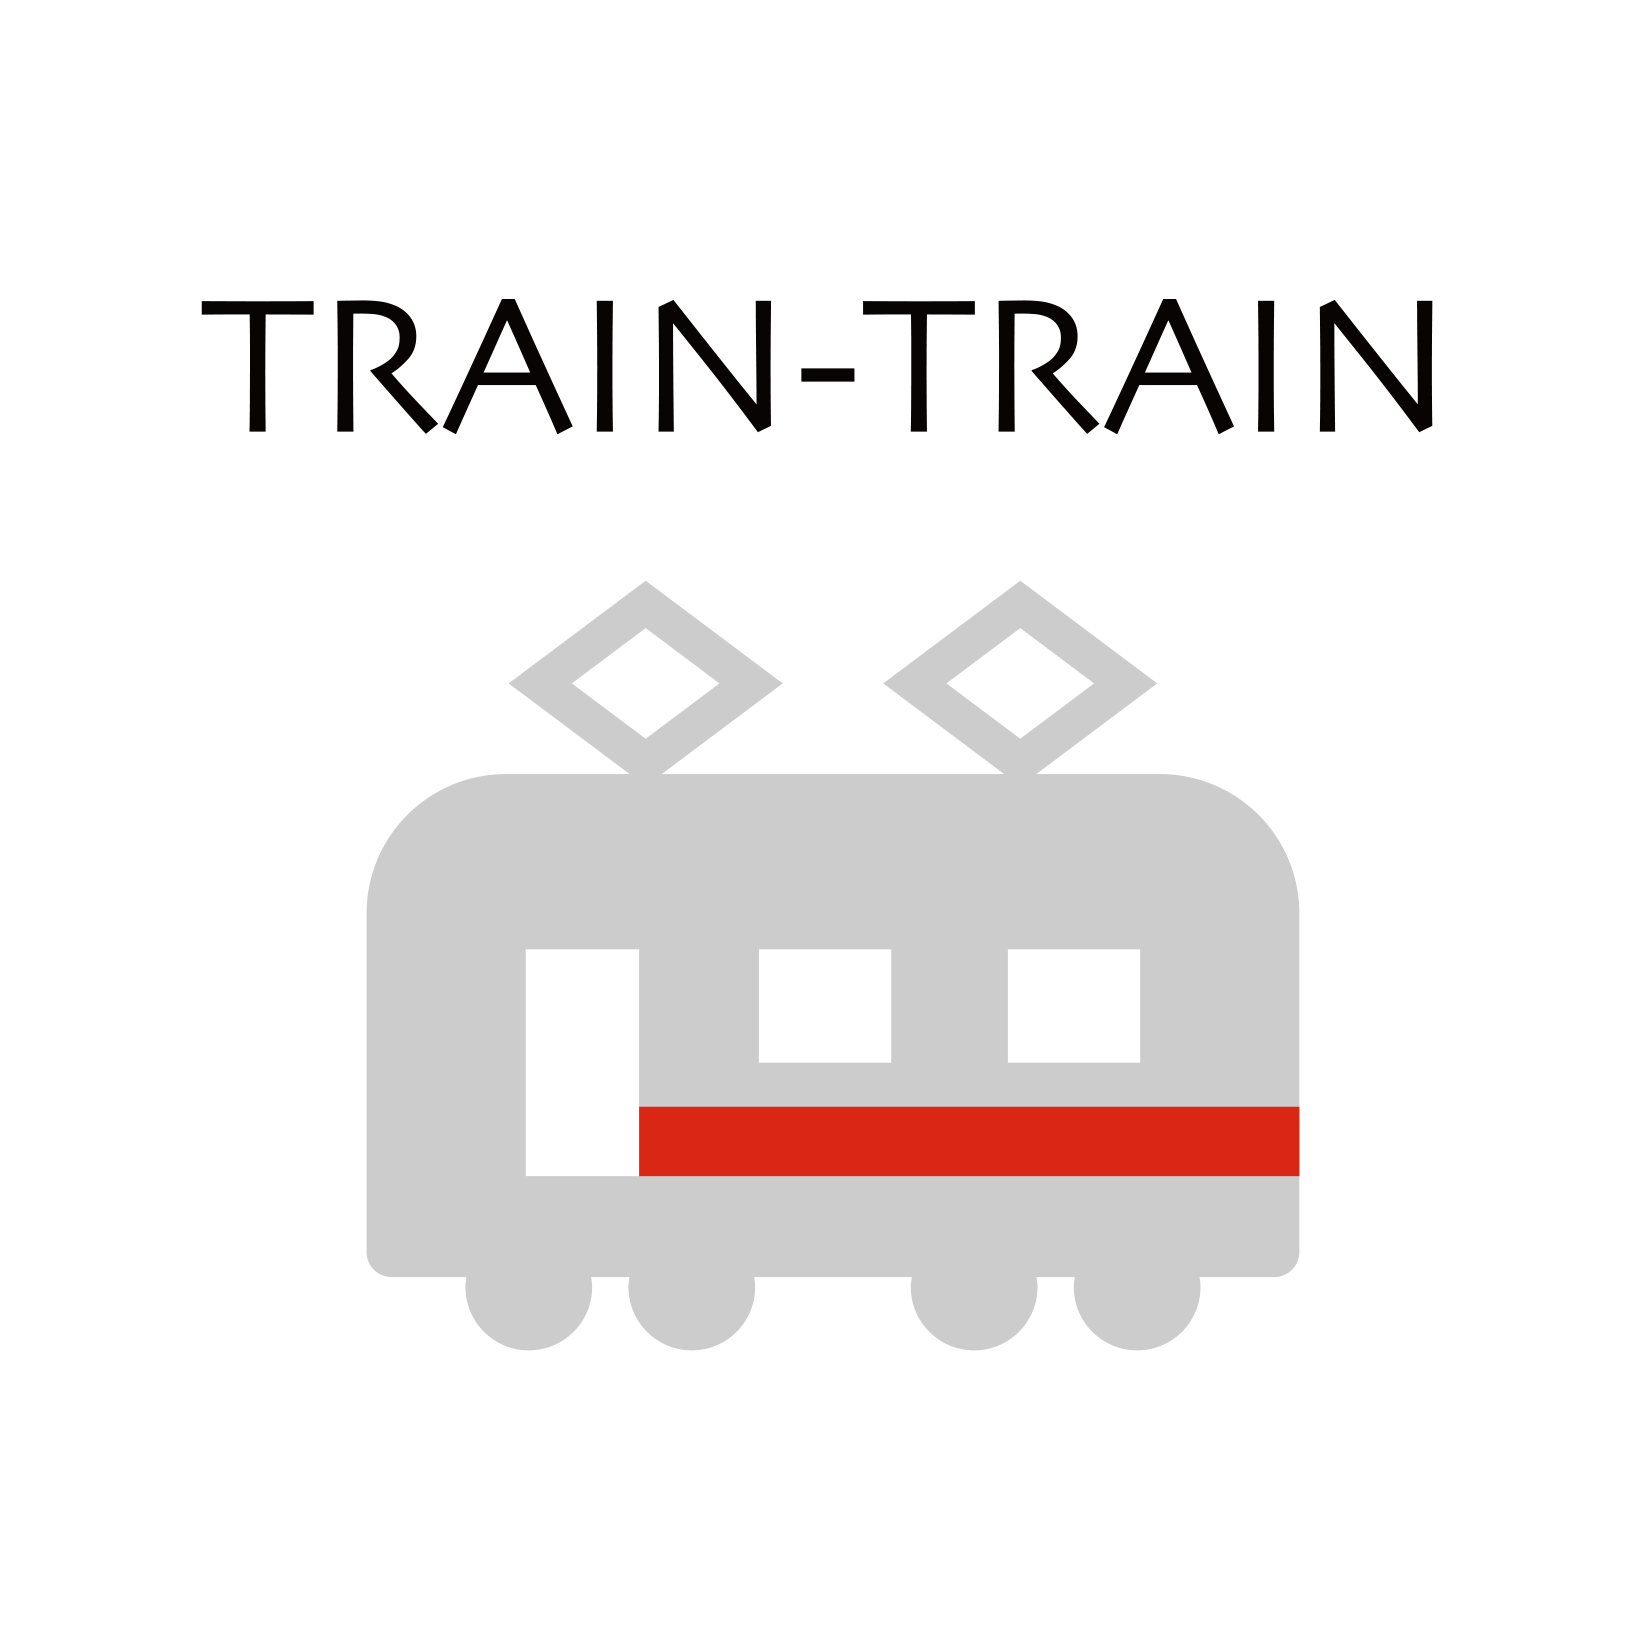 TRAIN-TRAIN